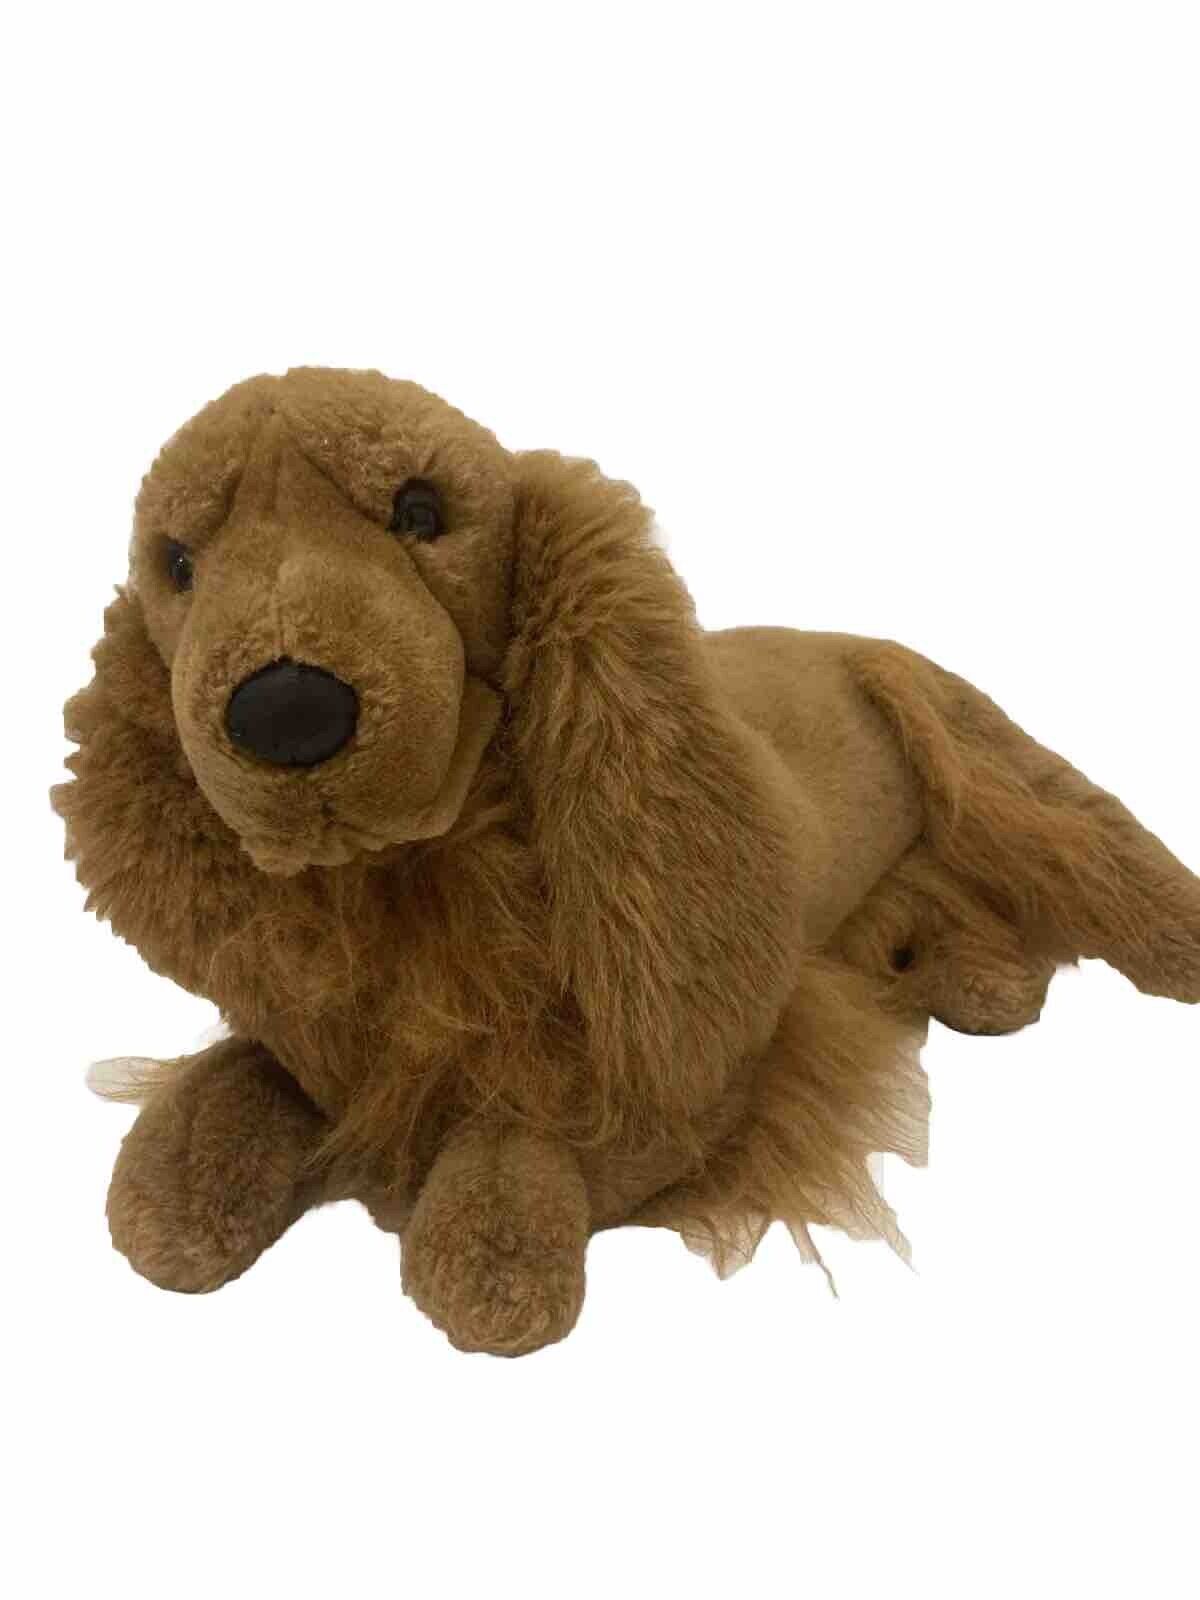 Realistic Dog Stuffed Animal Plush Brown Long Hair Black Plastic Eyes Large 22”